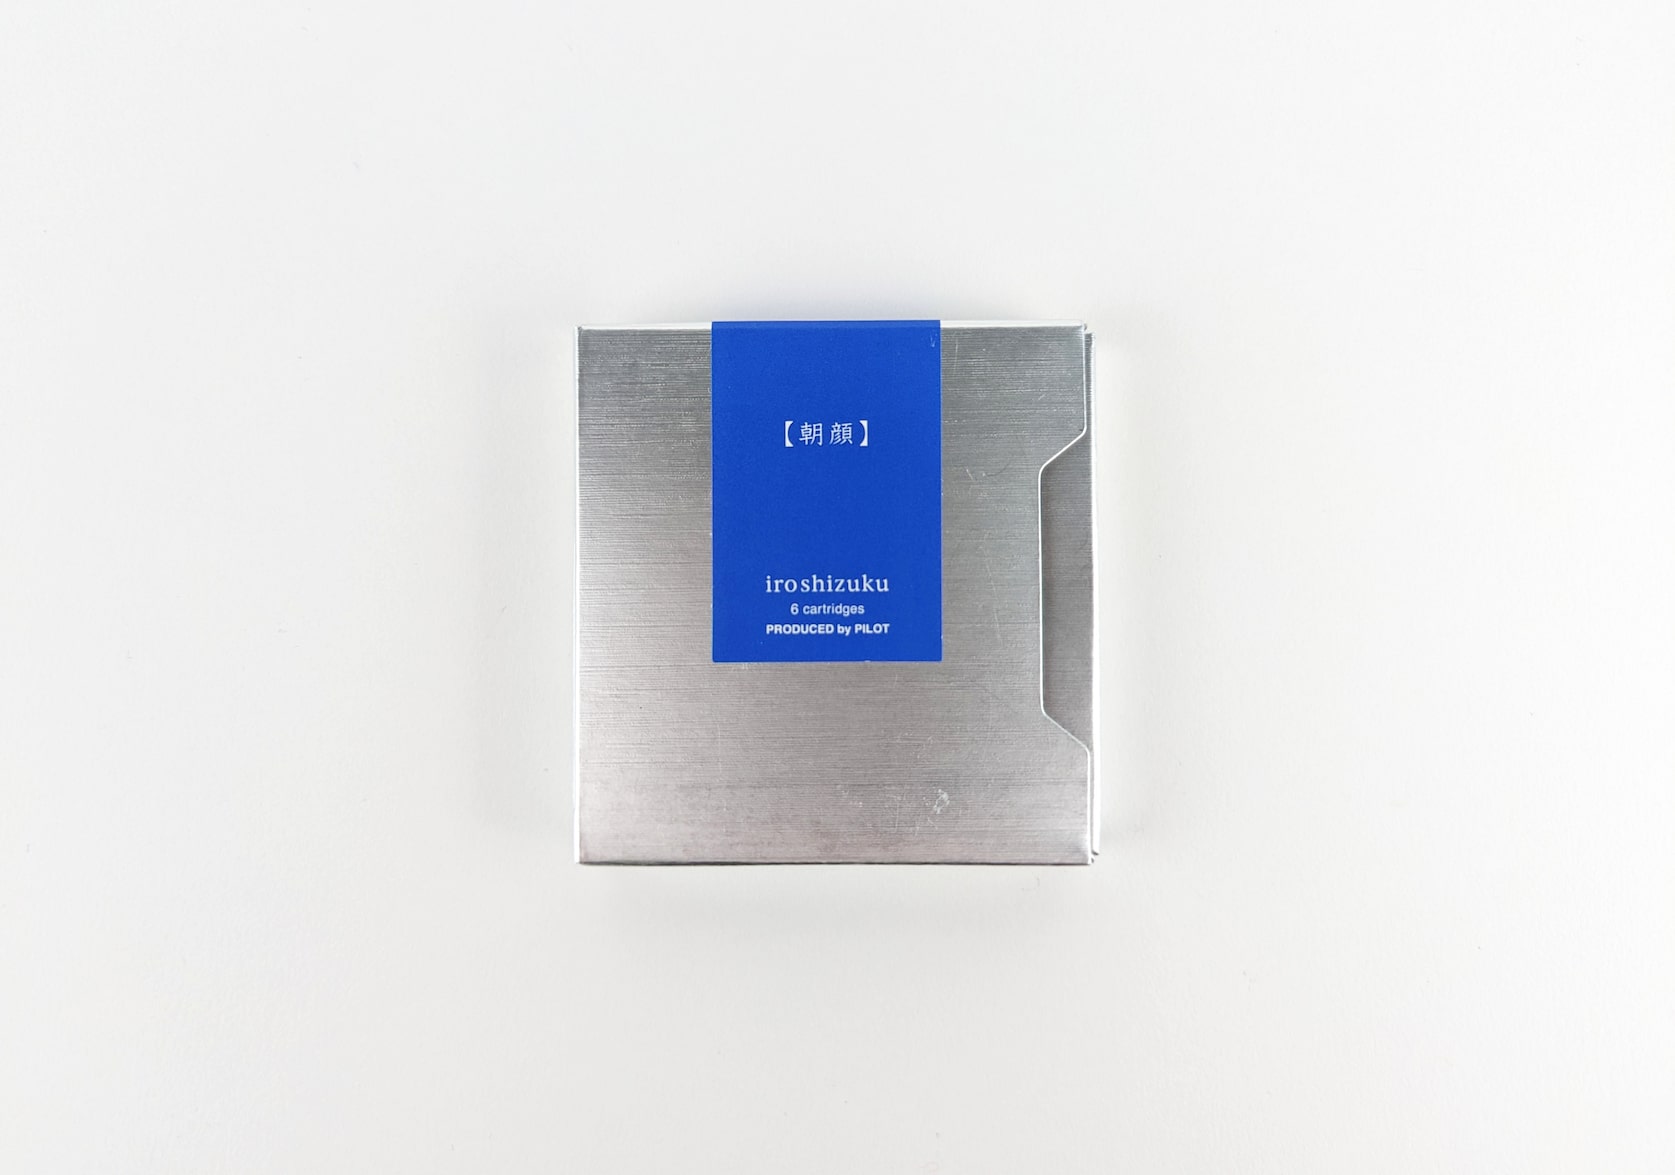 Silver sliding box. Rectangular royal blue sticker with white text that reads: asa-gao. iroshizuku. 6 cartridges. Produced by Pilot.